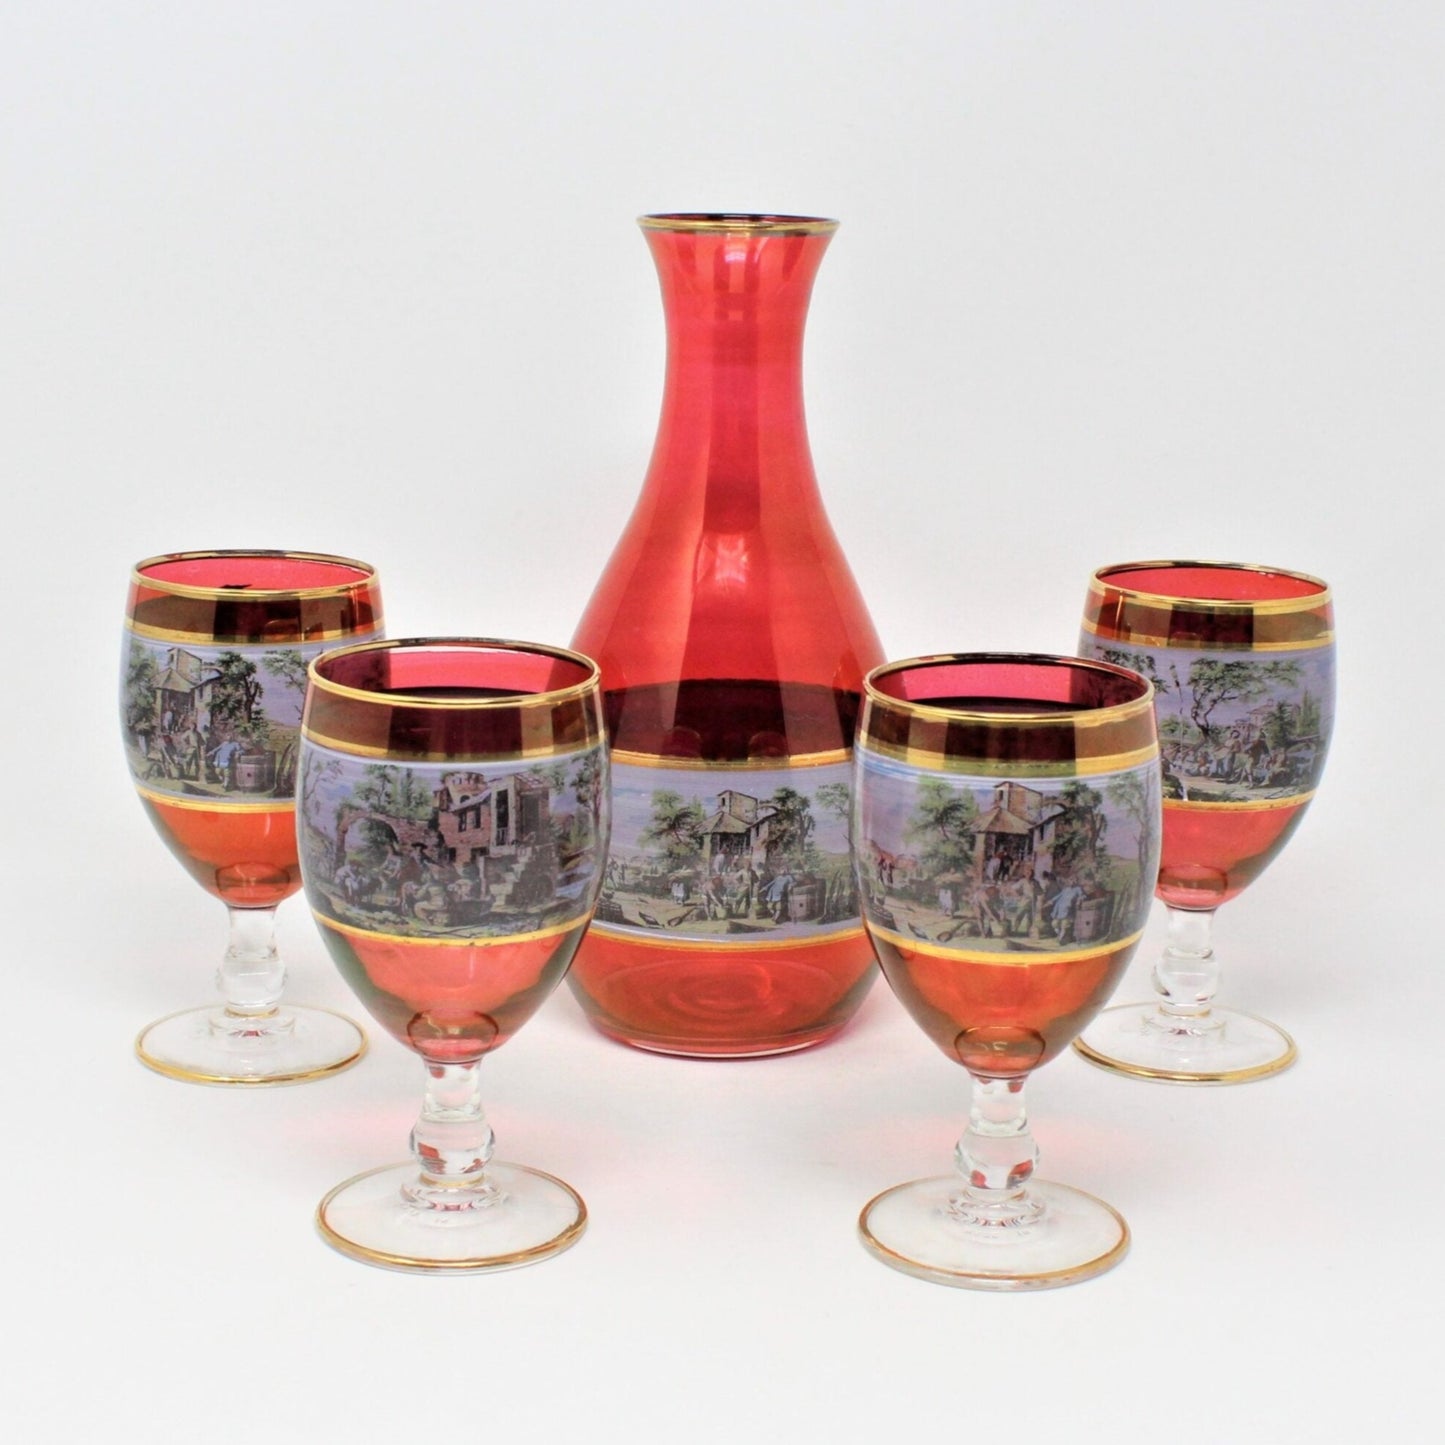 Decanter & Glasses, Red Glass Italian Renaissance Scene, 5 Pcs, Vintage